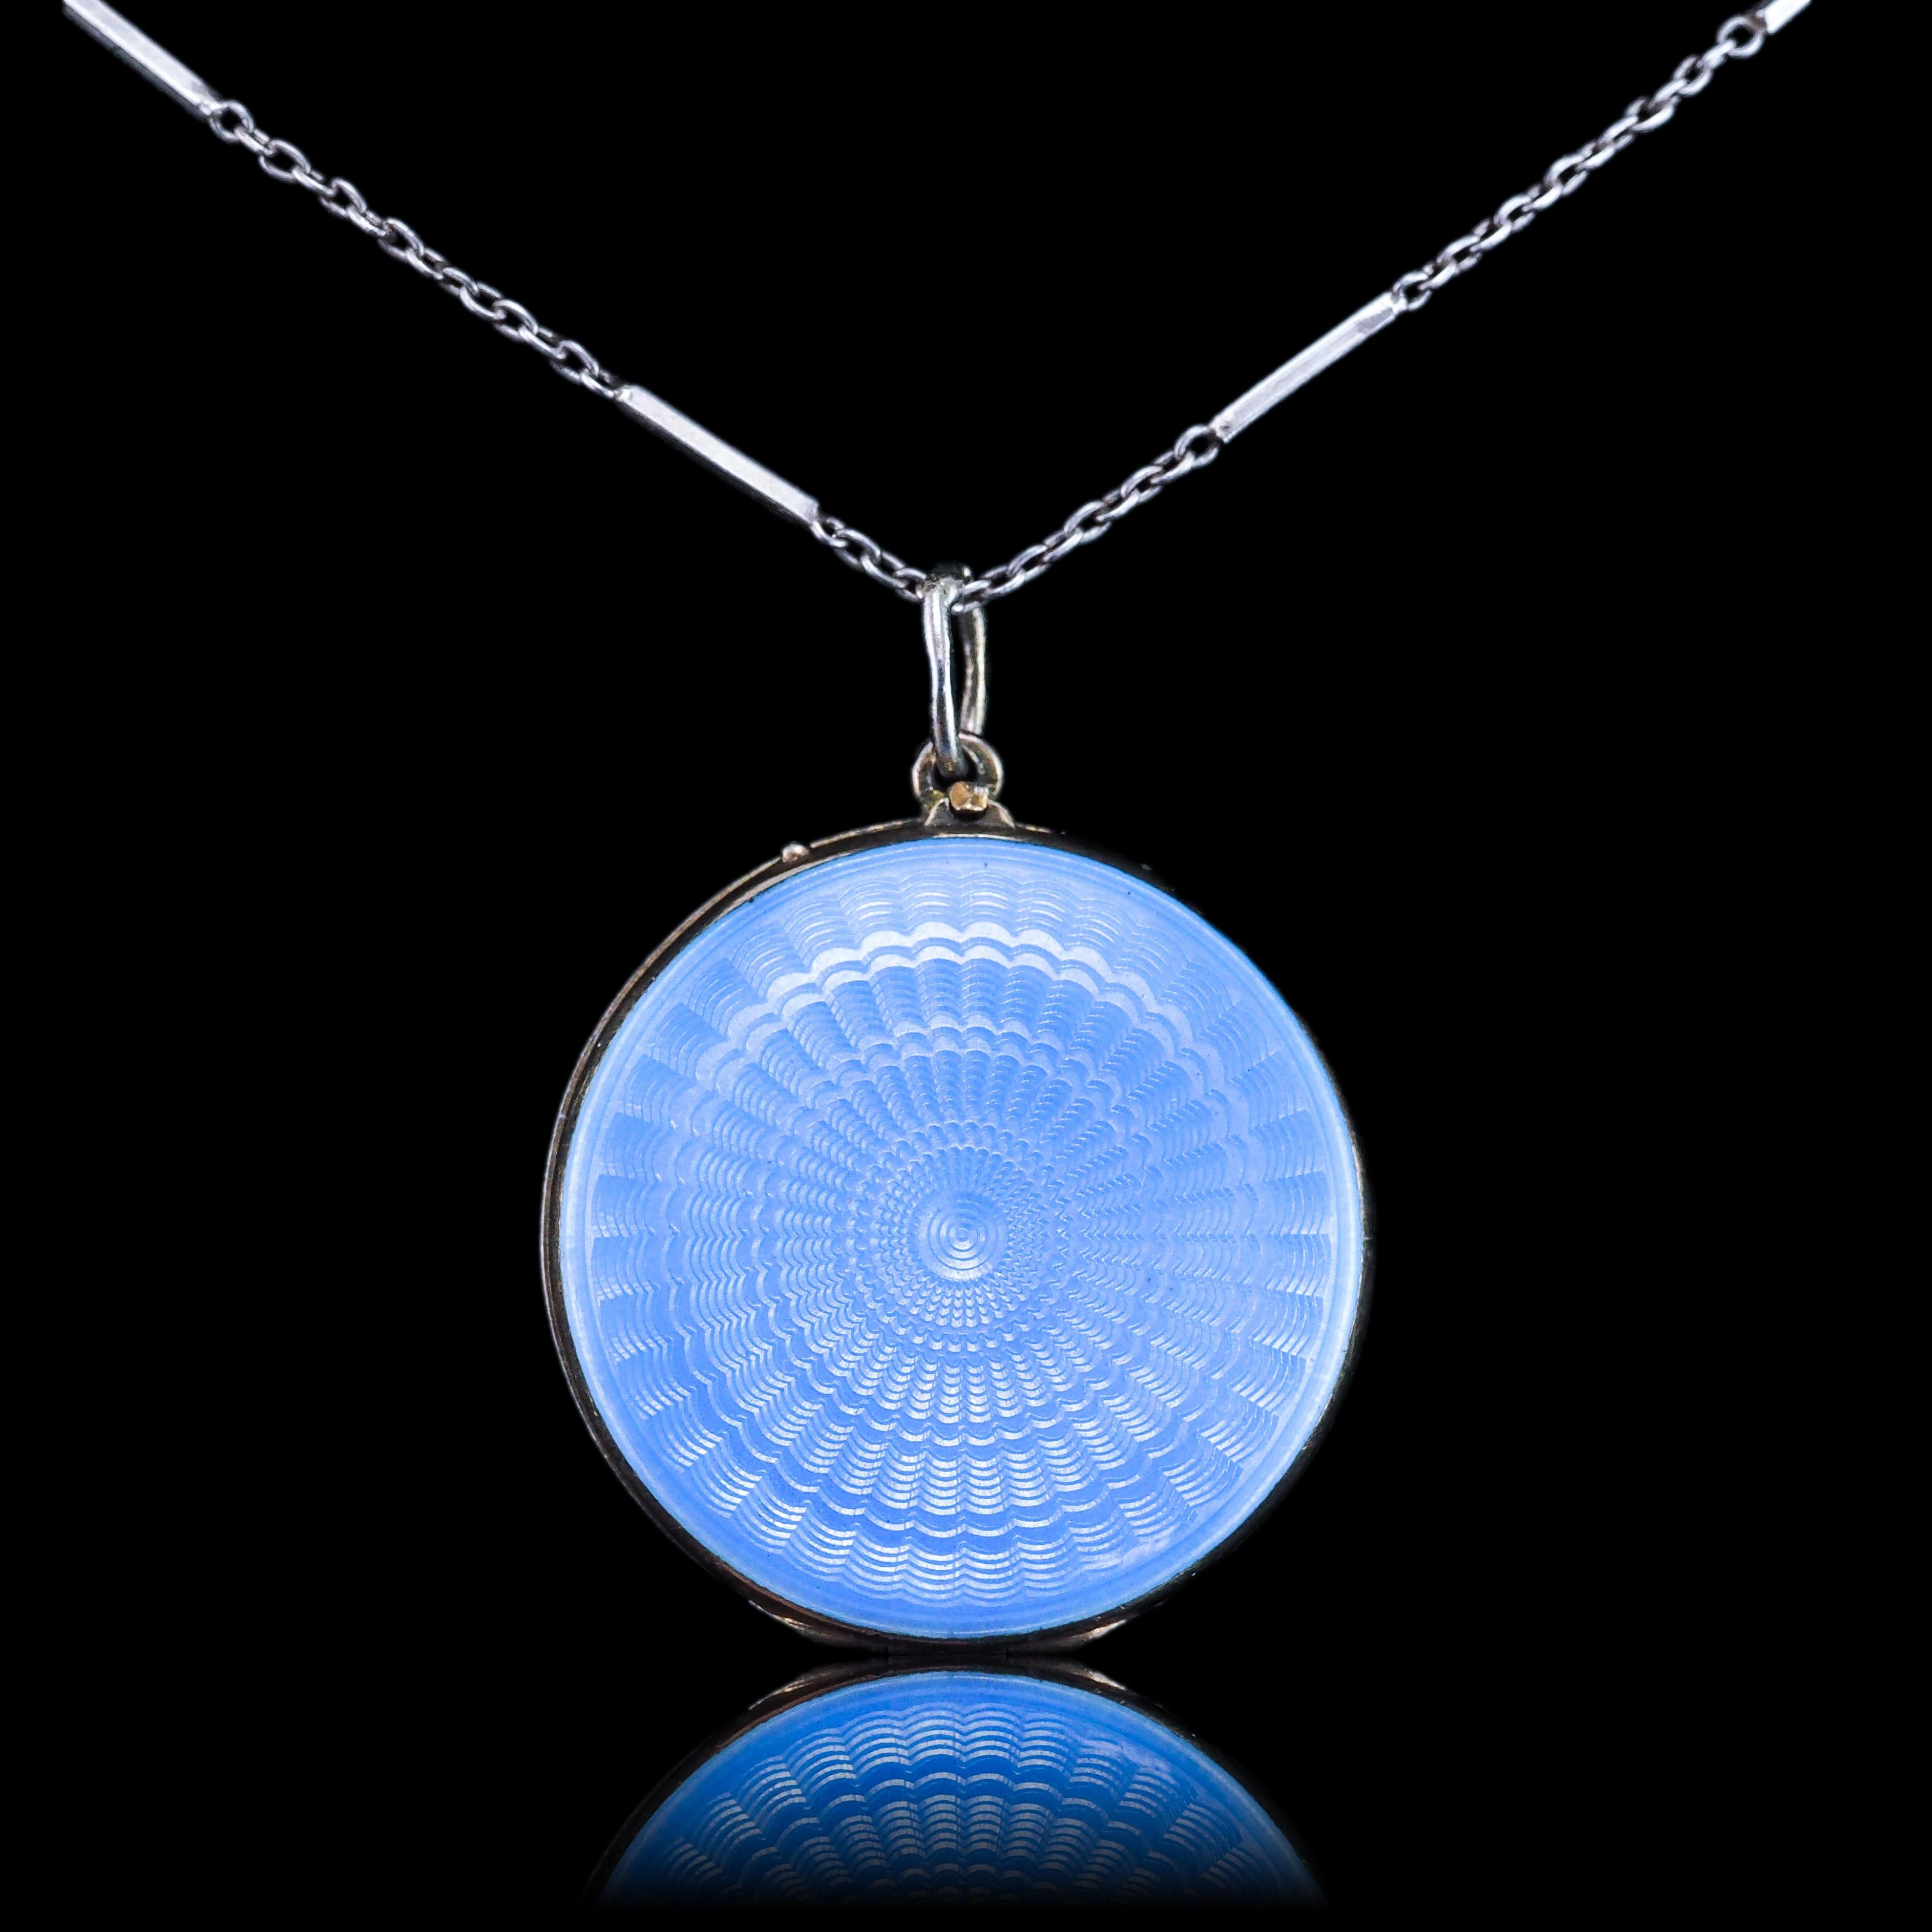 Antique Norwegian Blue Guilloche Enamel Pendant Necklace Locket - Marius Hammer For Sale 10